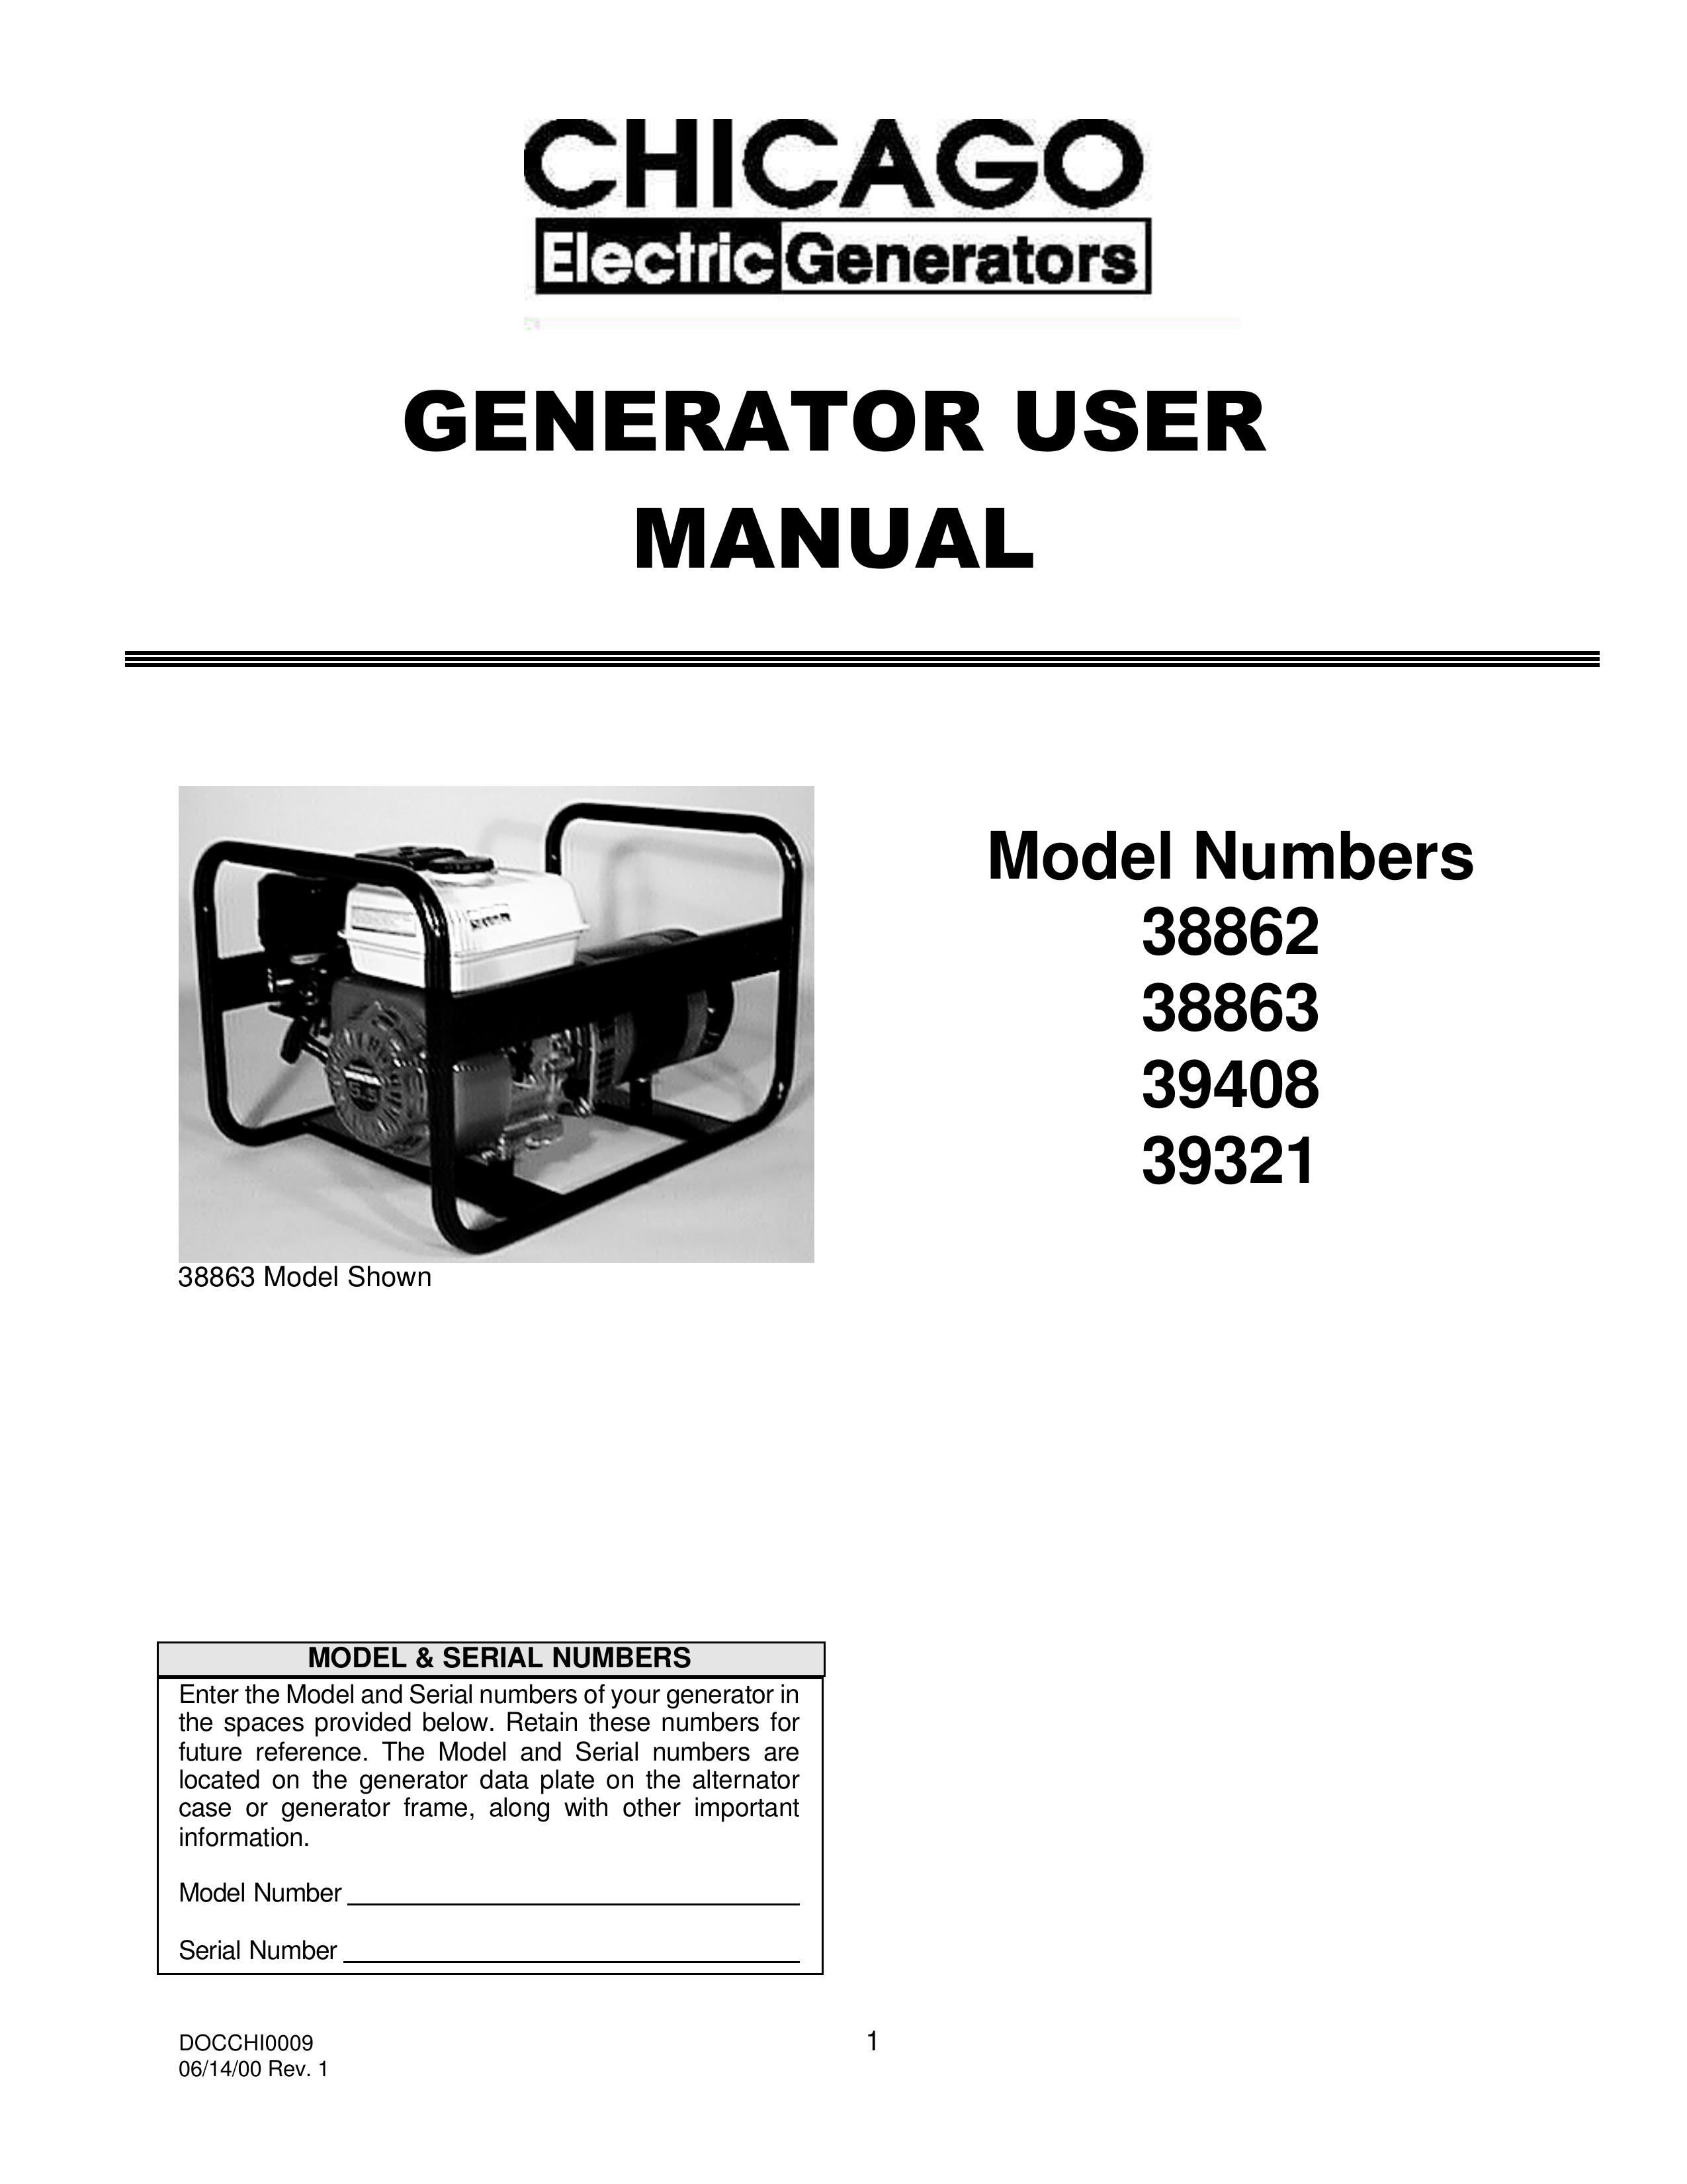 Chicago Electric 39321 Portable Generator User Manual